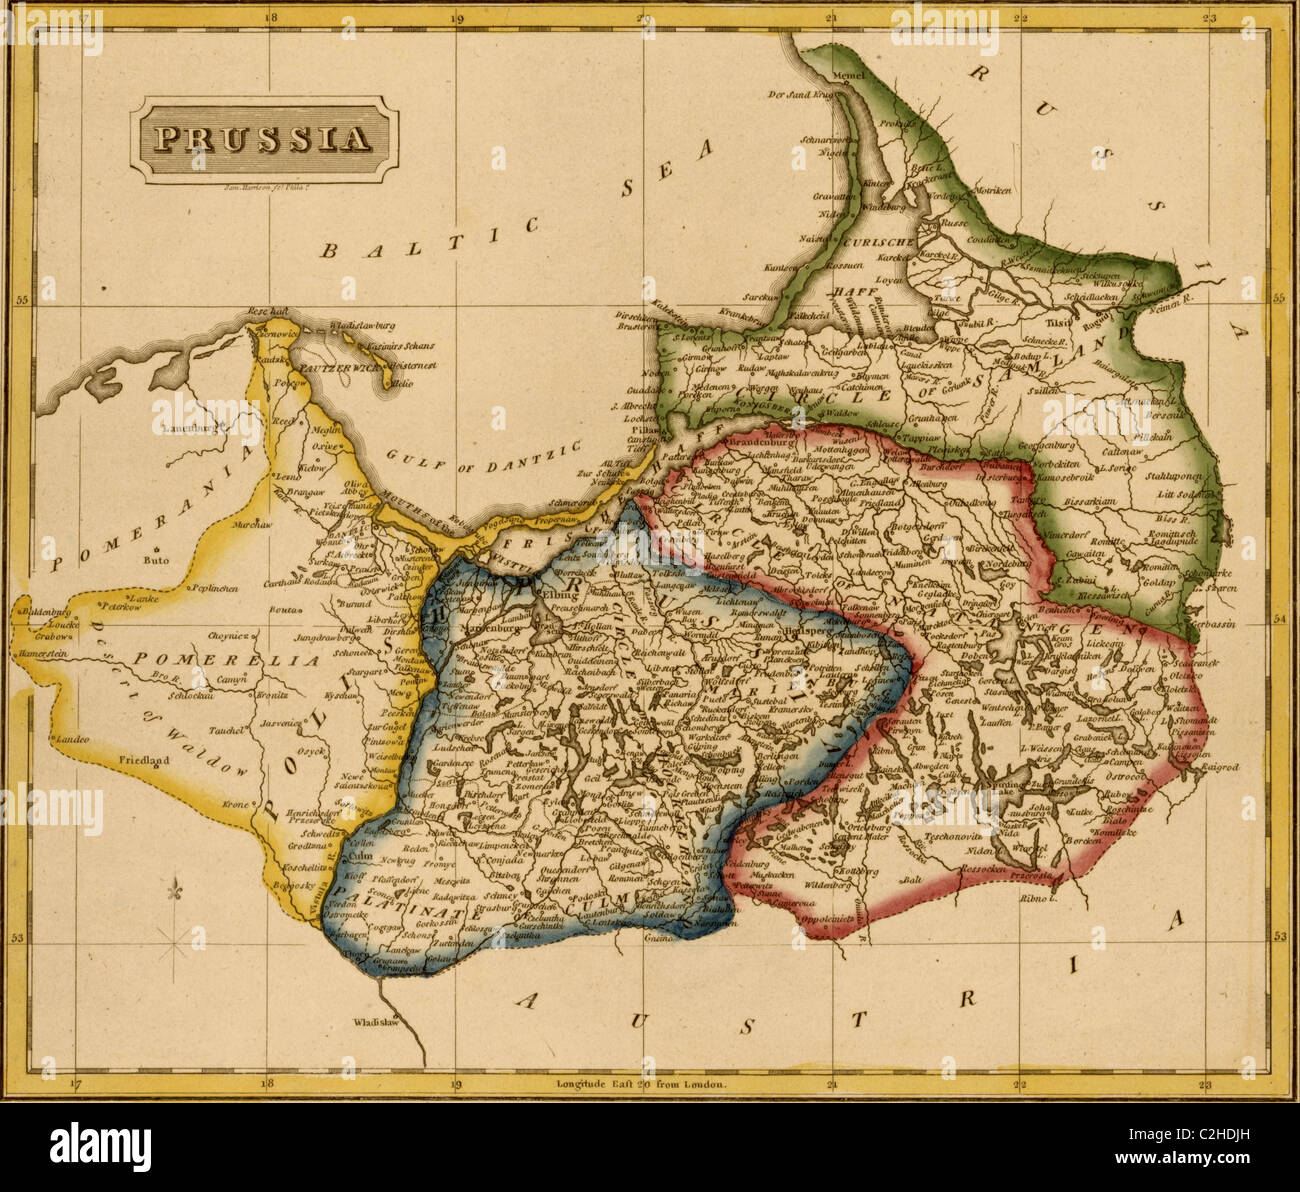 Prussia - 1817 Stock Photo